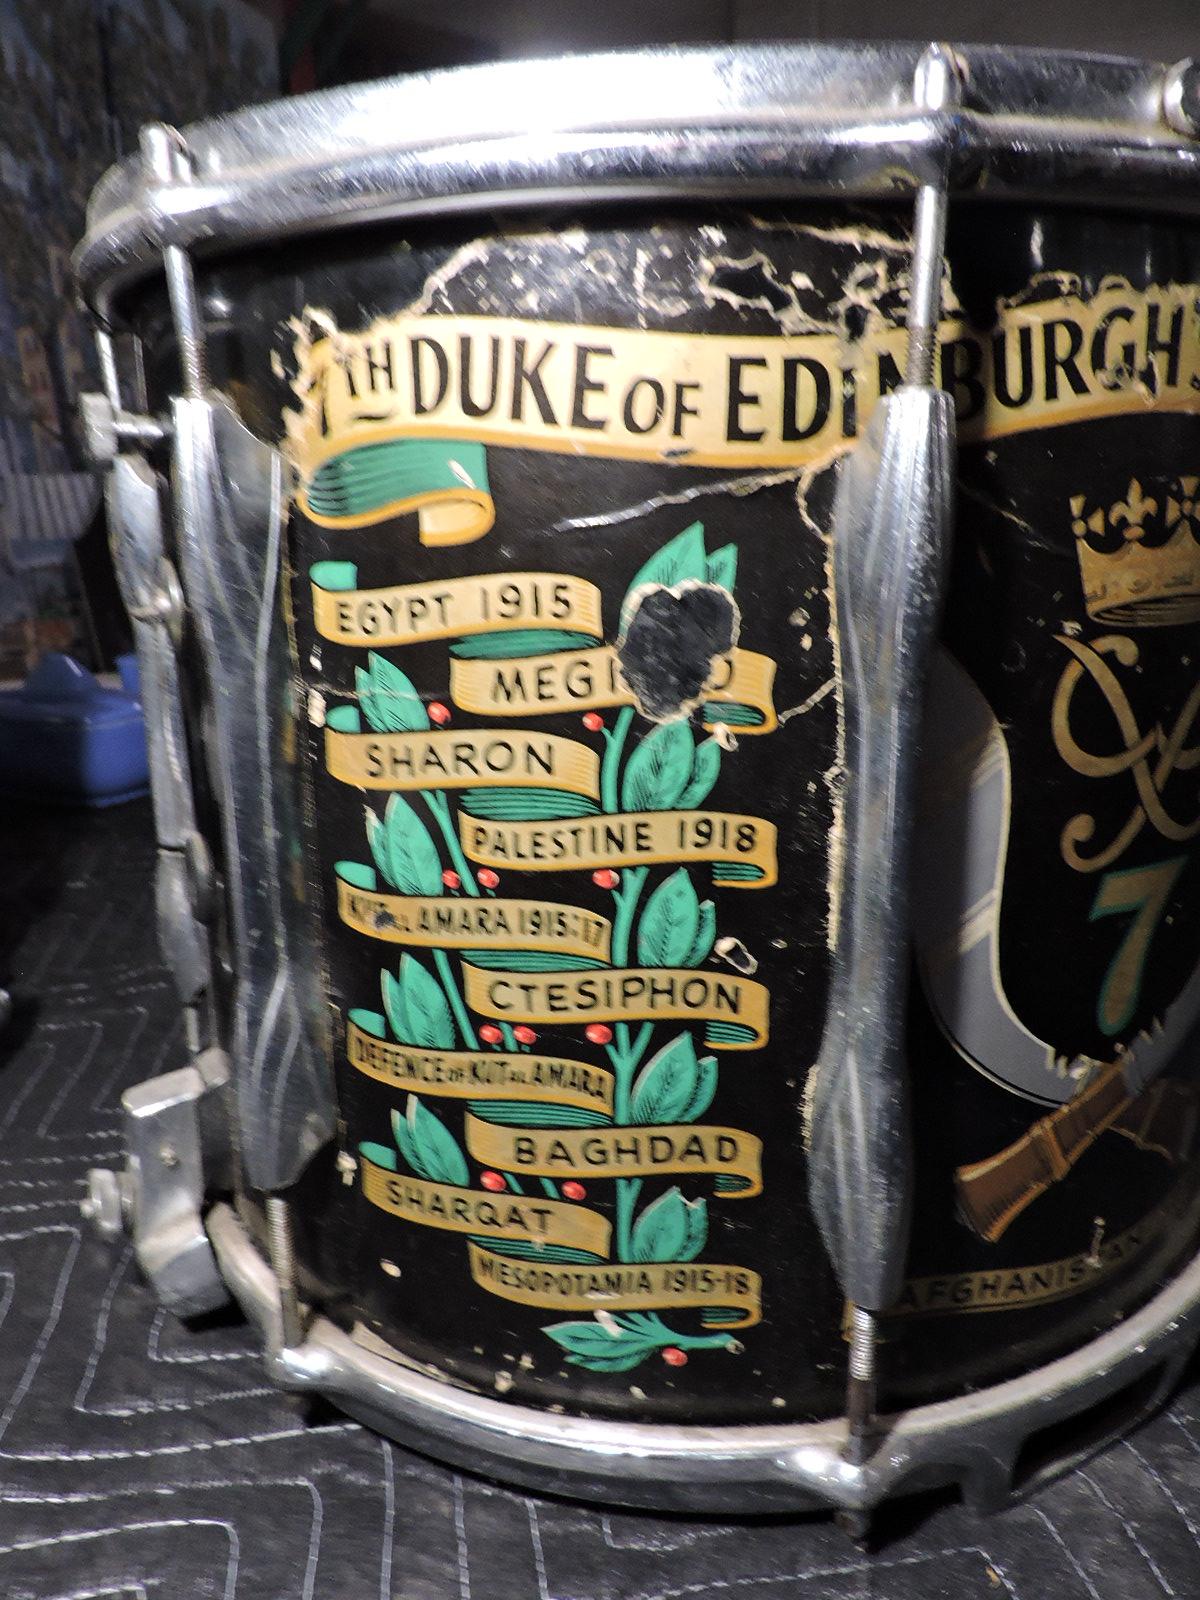 7th DUKE OF EDINBURGH'S GURKAHA RIFLES - Hand Painted Battle-Themed Drum